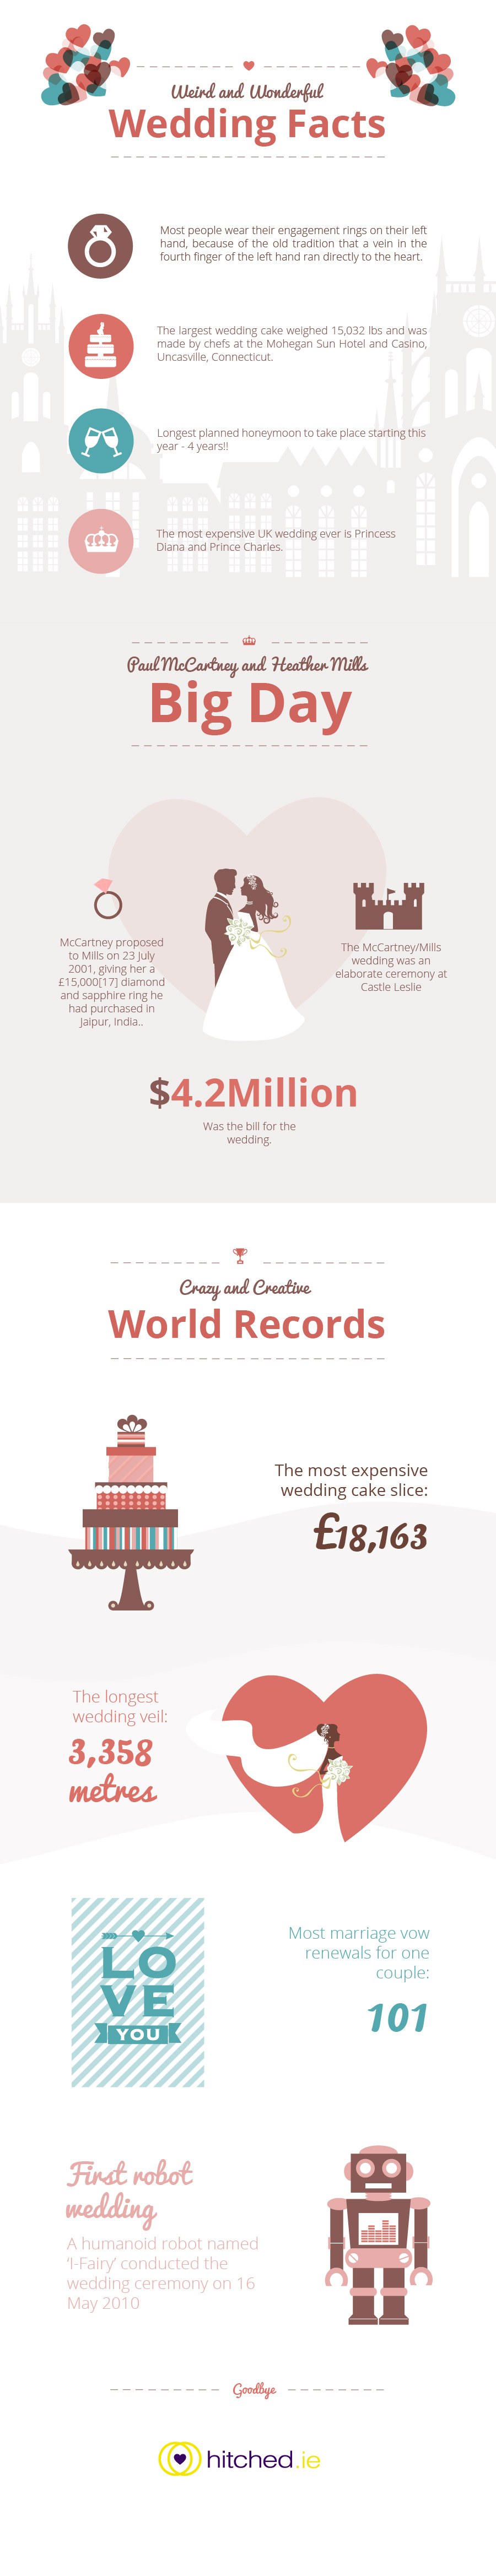 Few Bizarre wedding facts that surprises you